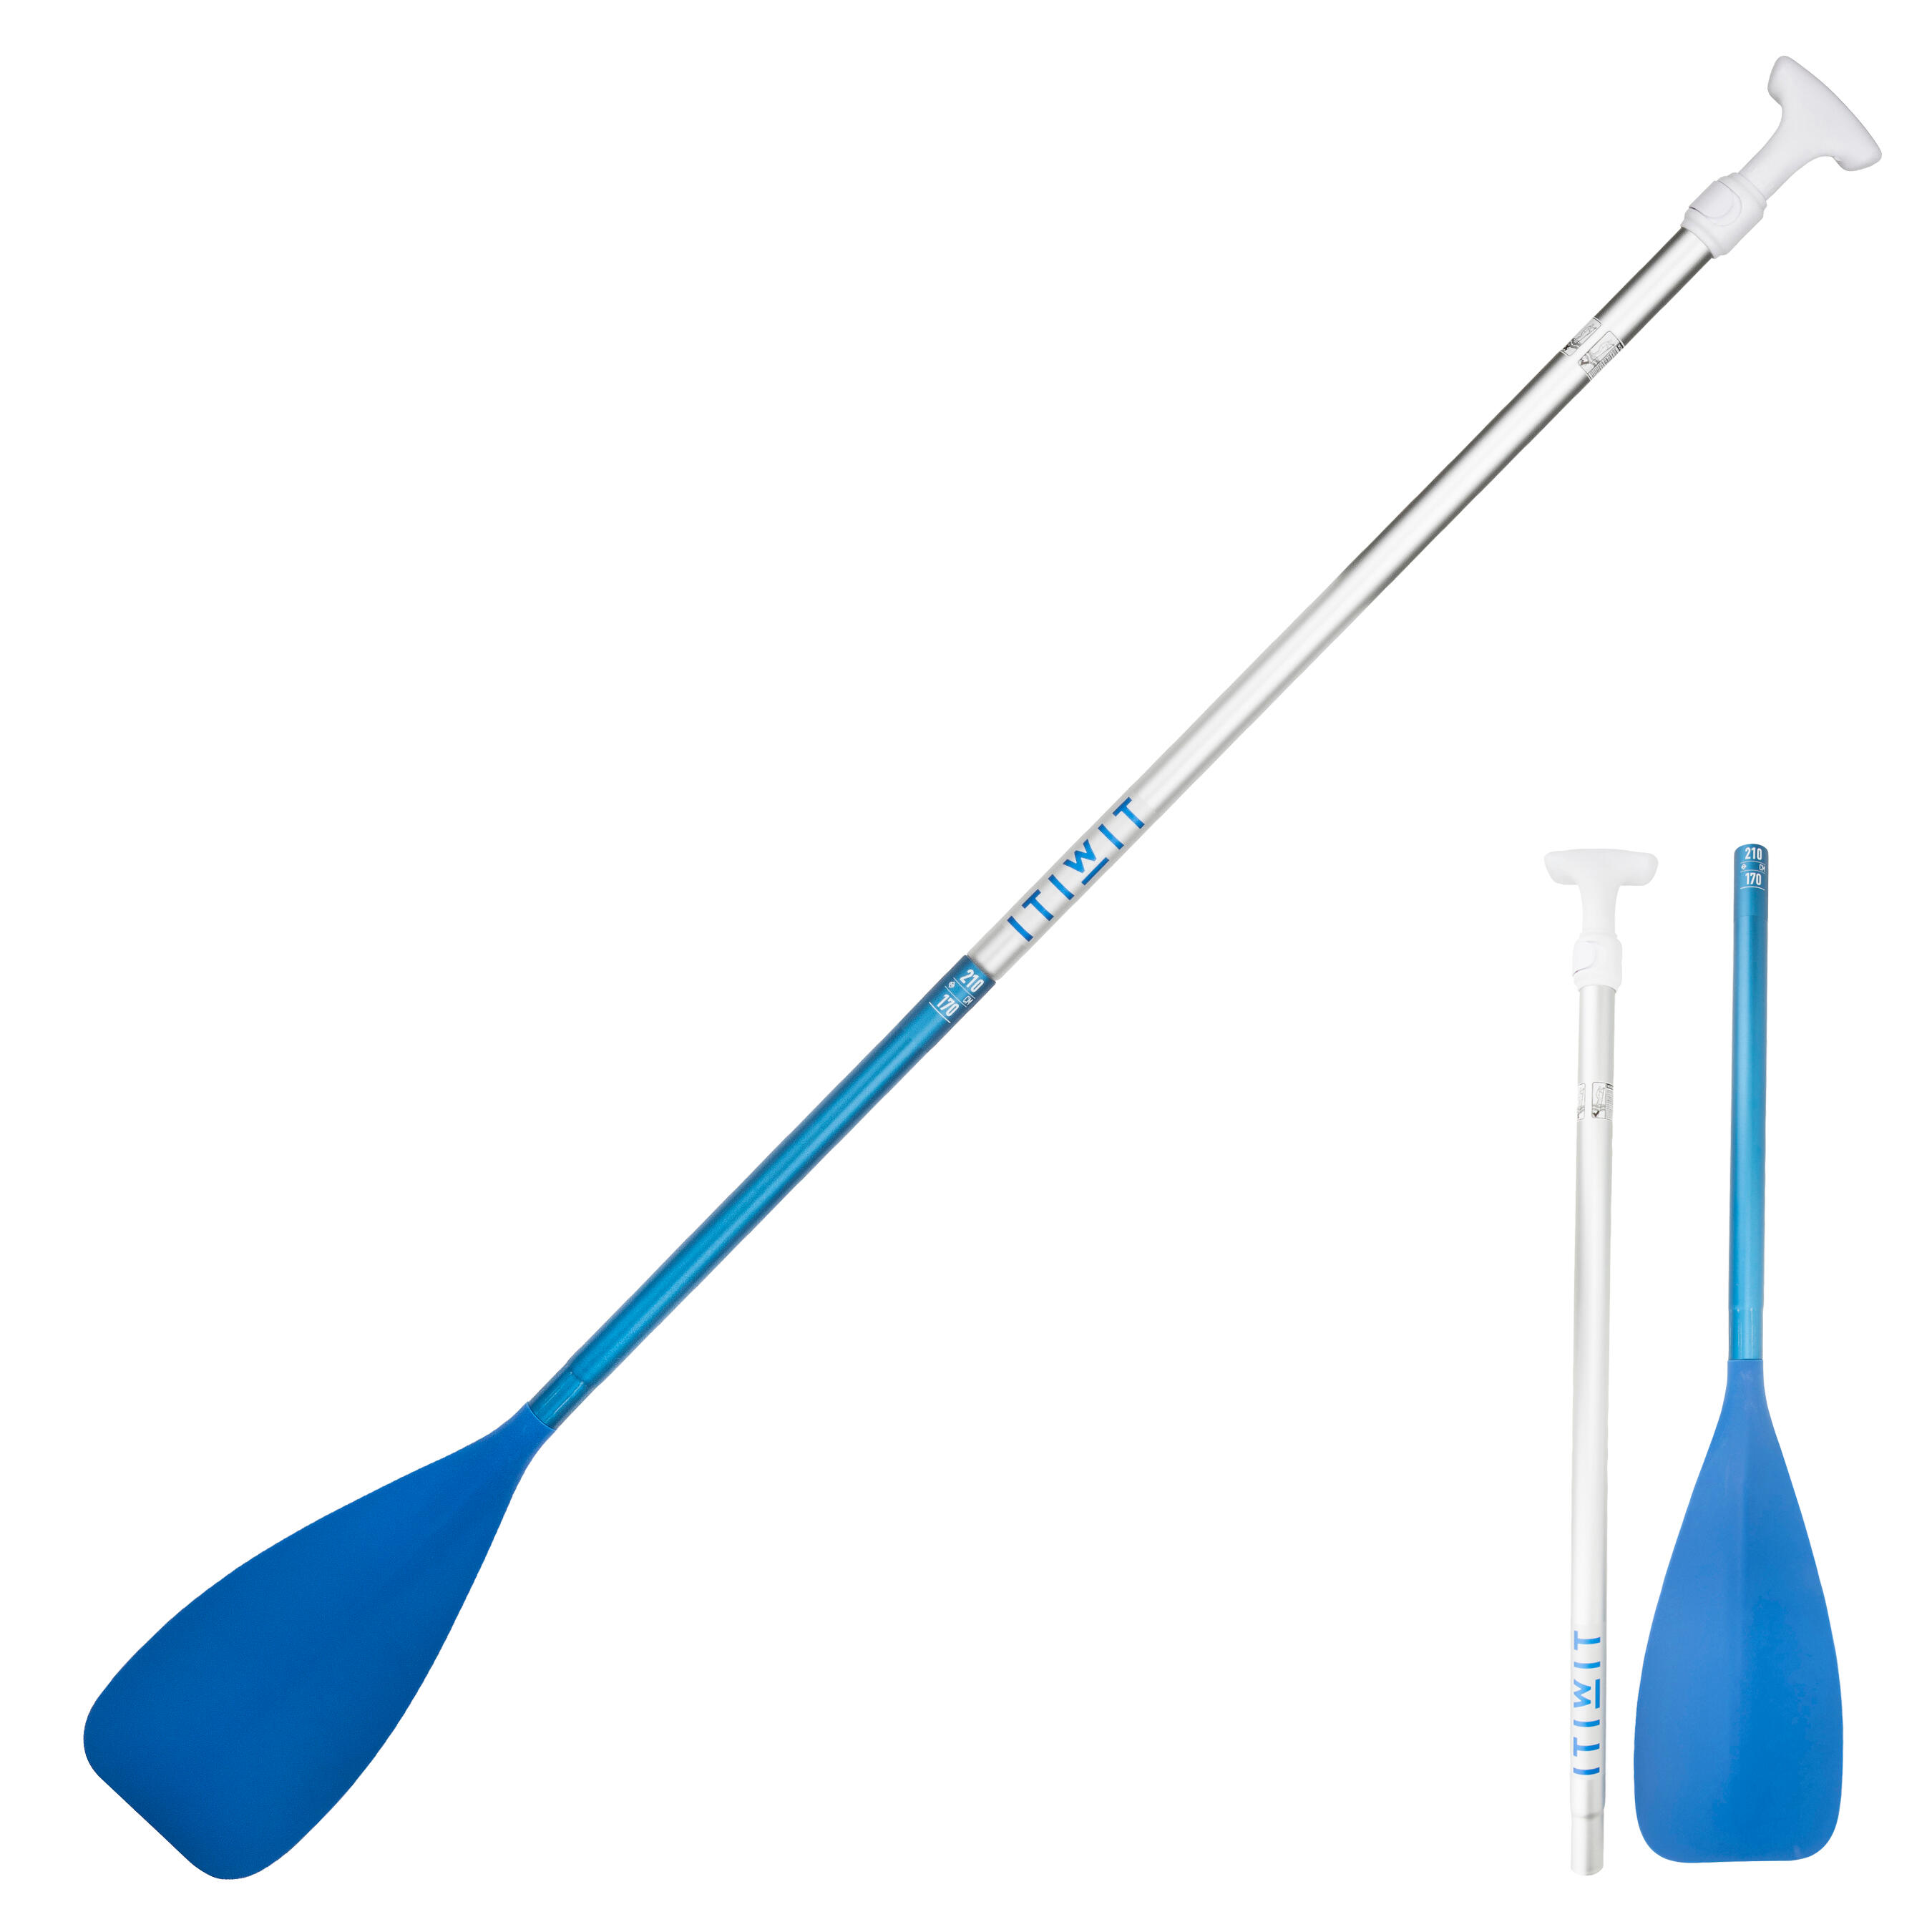 ITIWIT 100 Adjustable Split Stand-Up Paddle (SUP) Paddle 170-210 cm - Blue